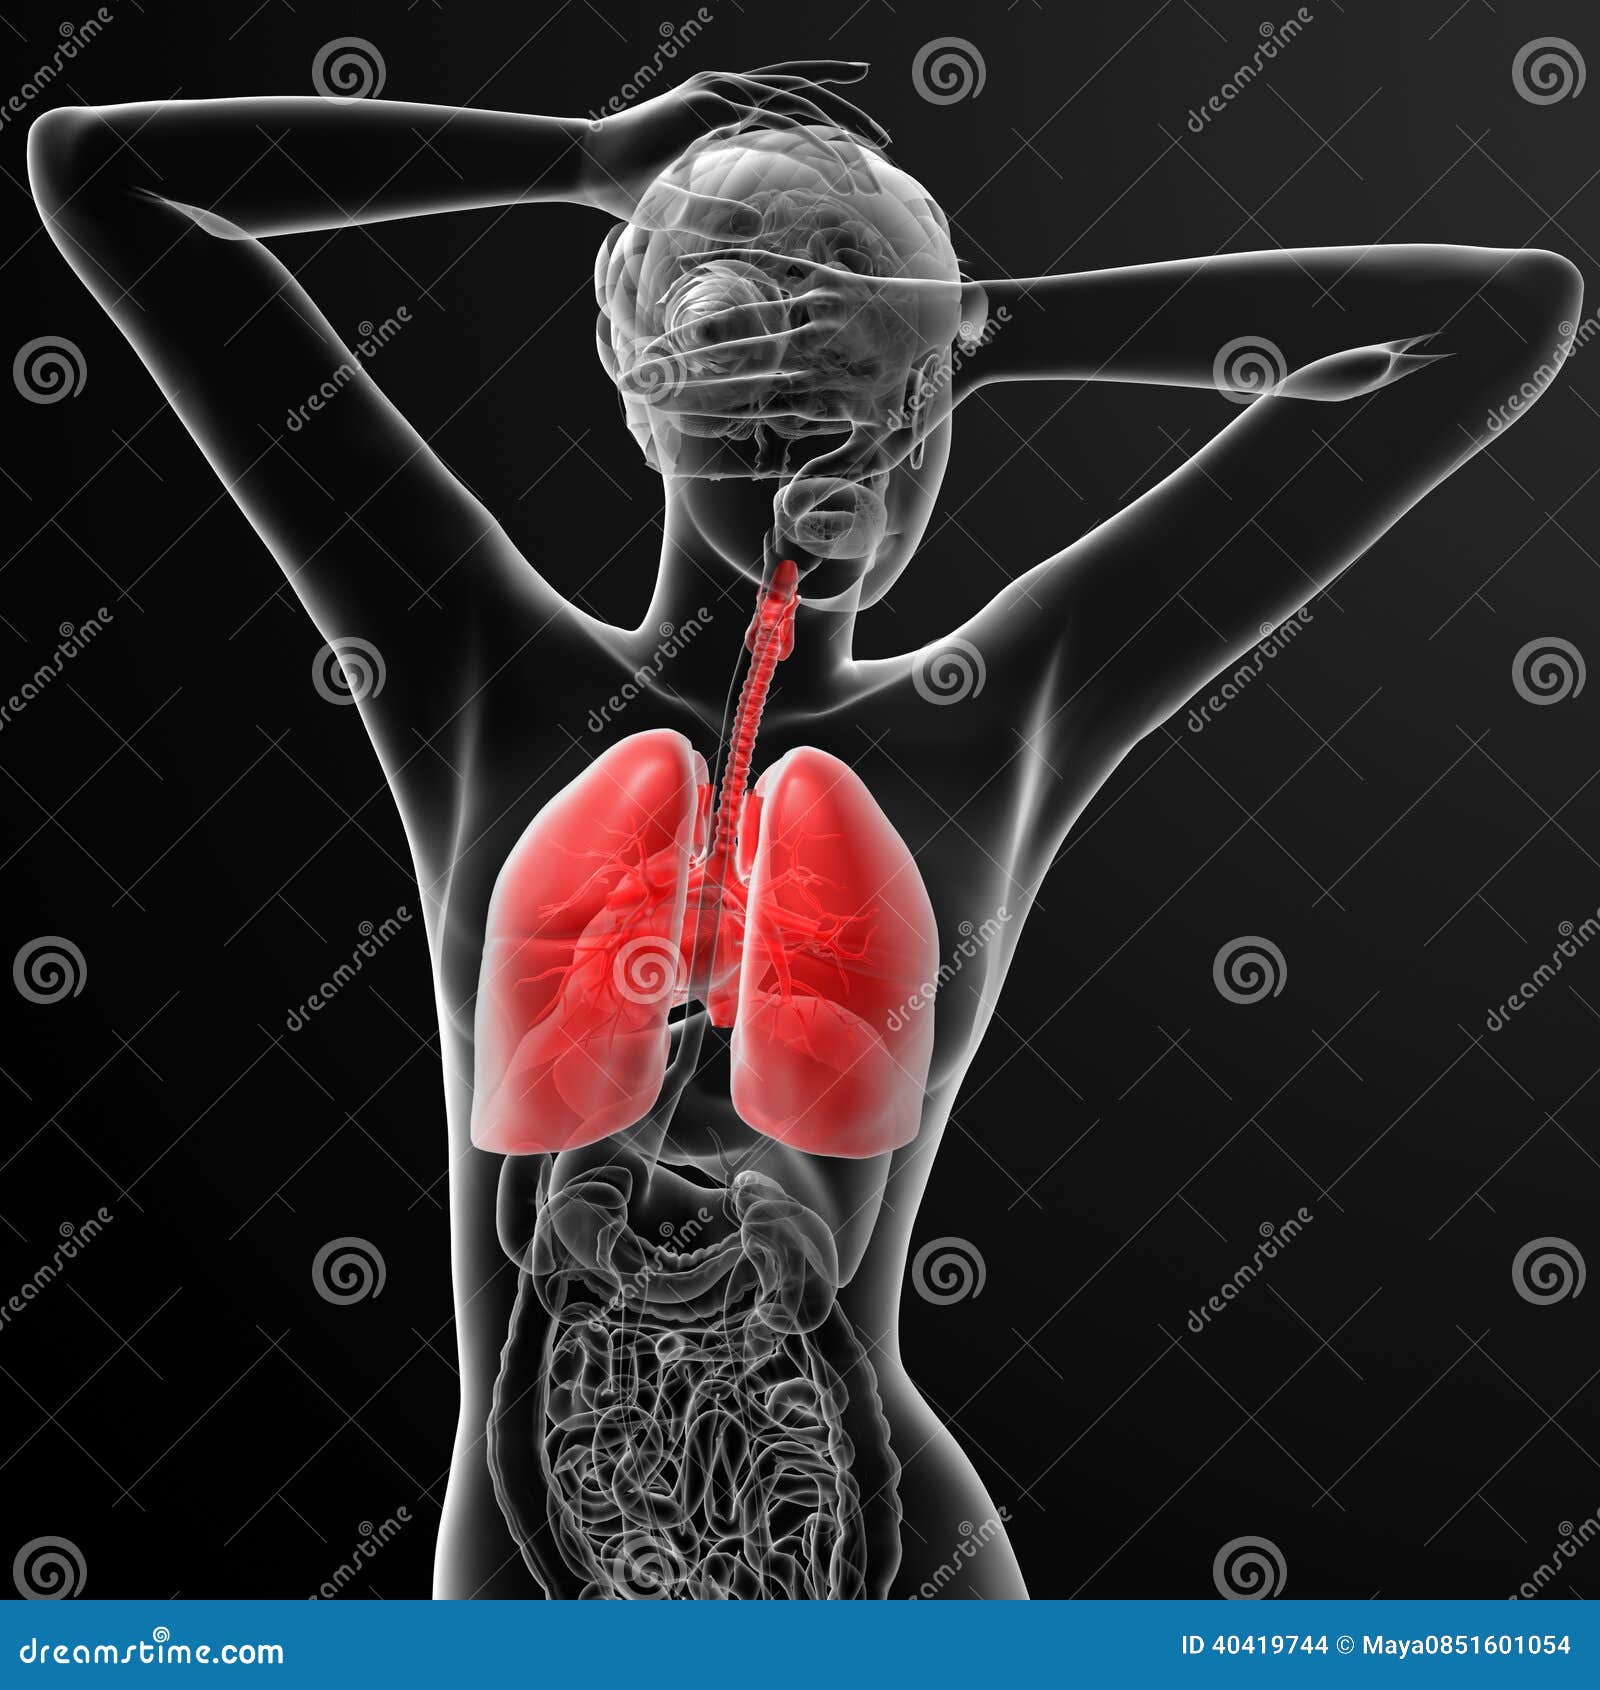 Respiratory system stock illustration. Illustration of female - 40419744